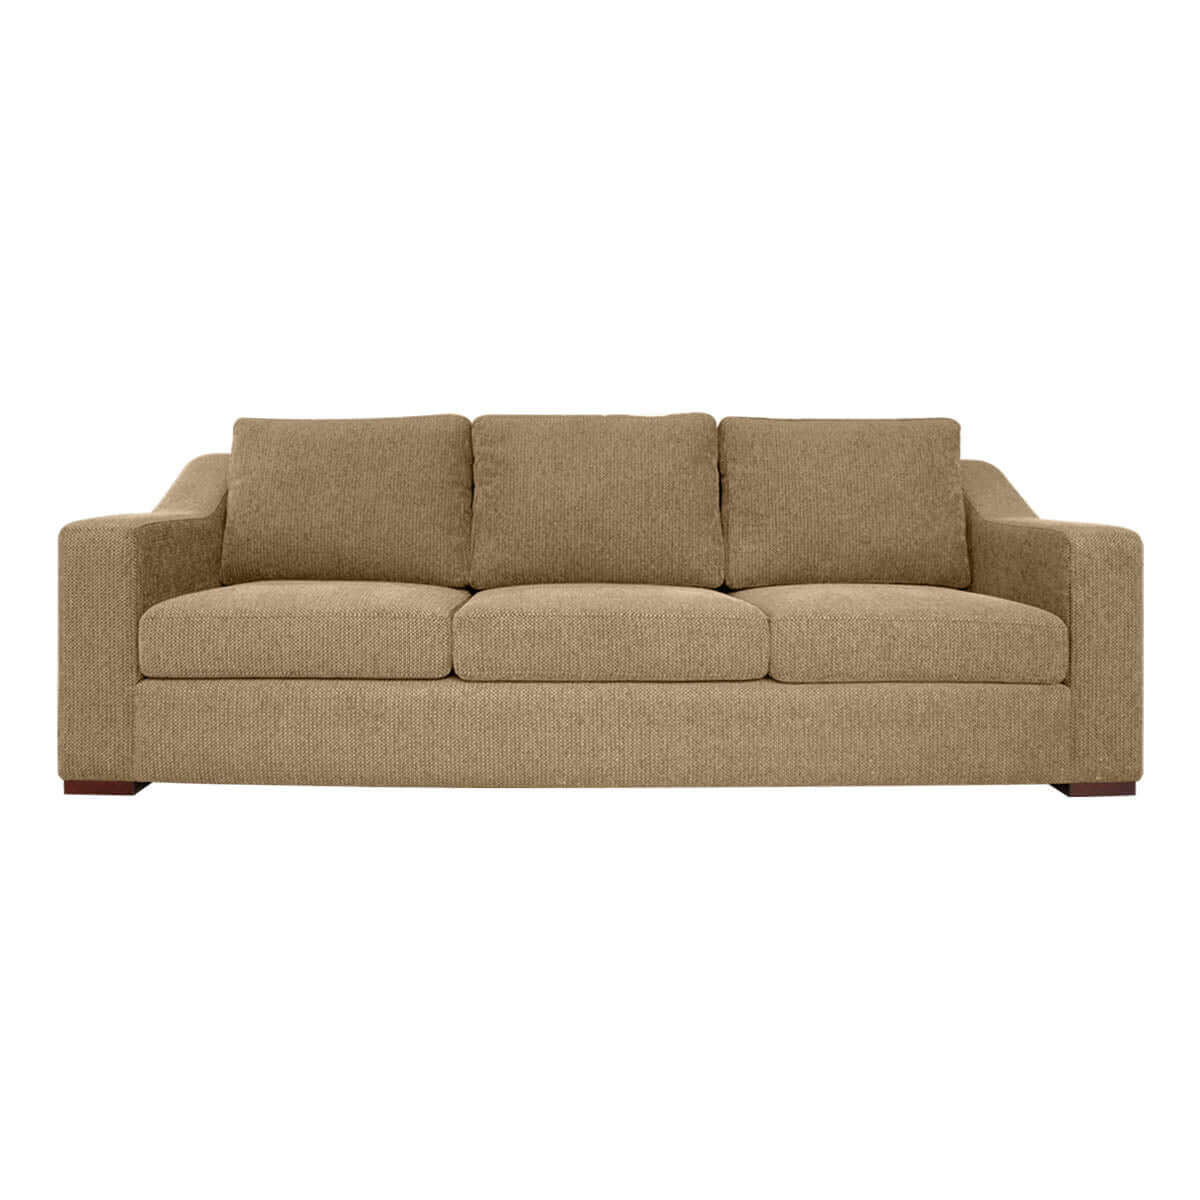 Presidio three seat sofa with prestigious accent arm furniture